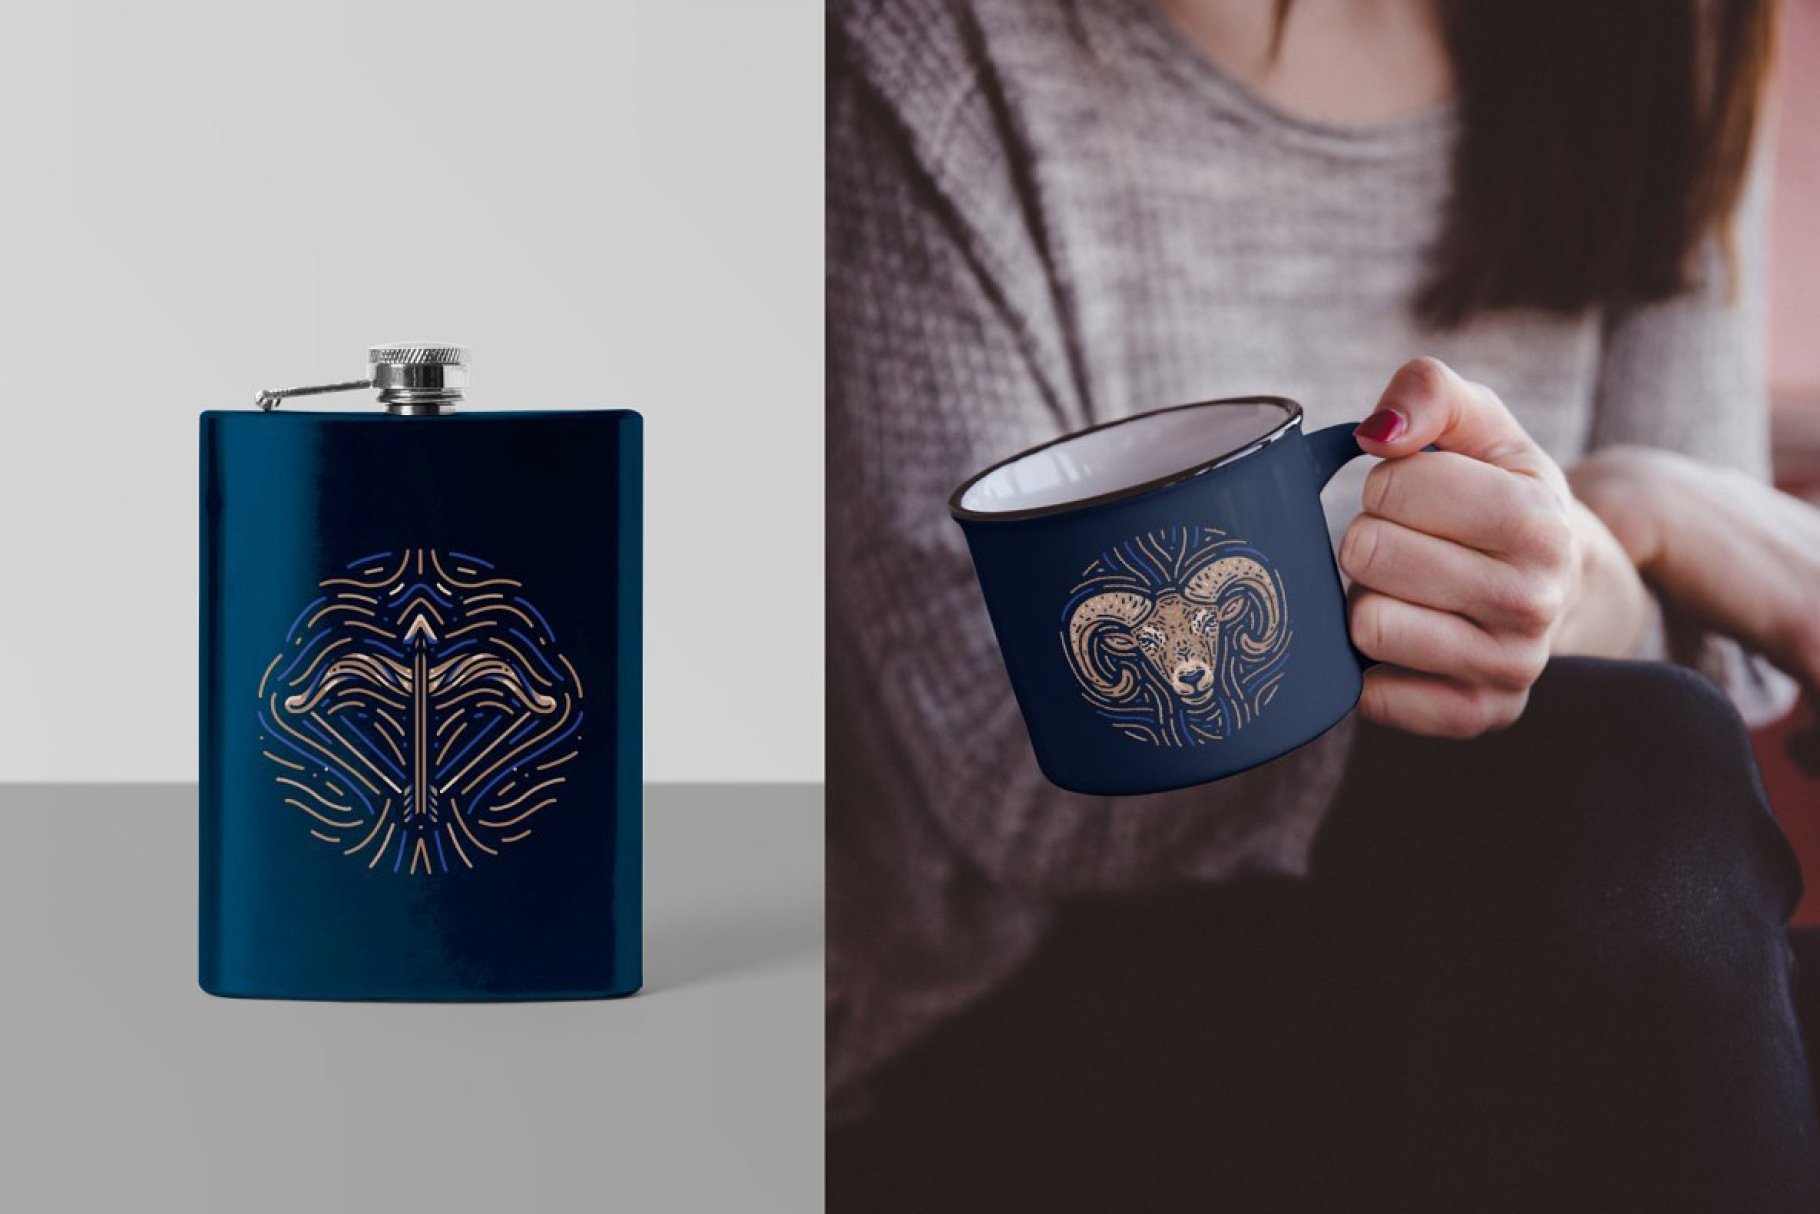 Themed mug items design.